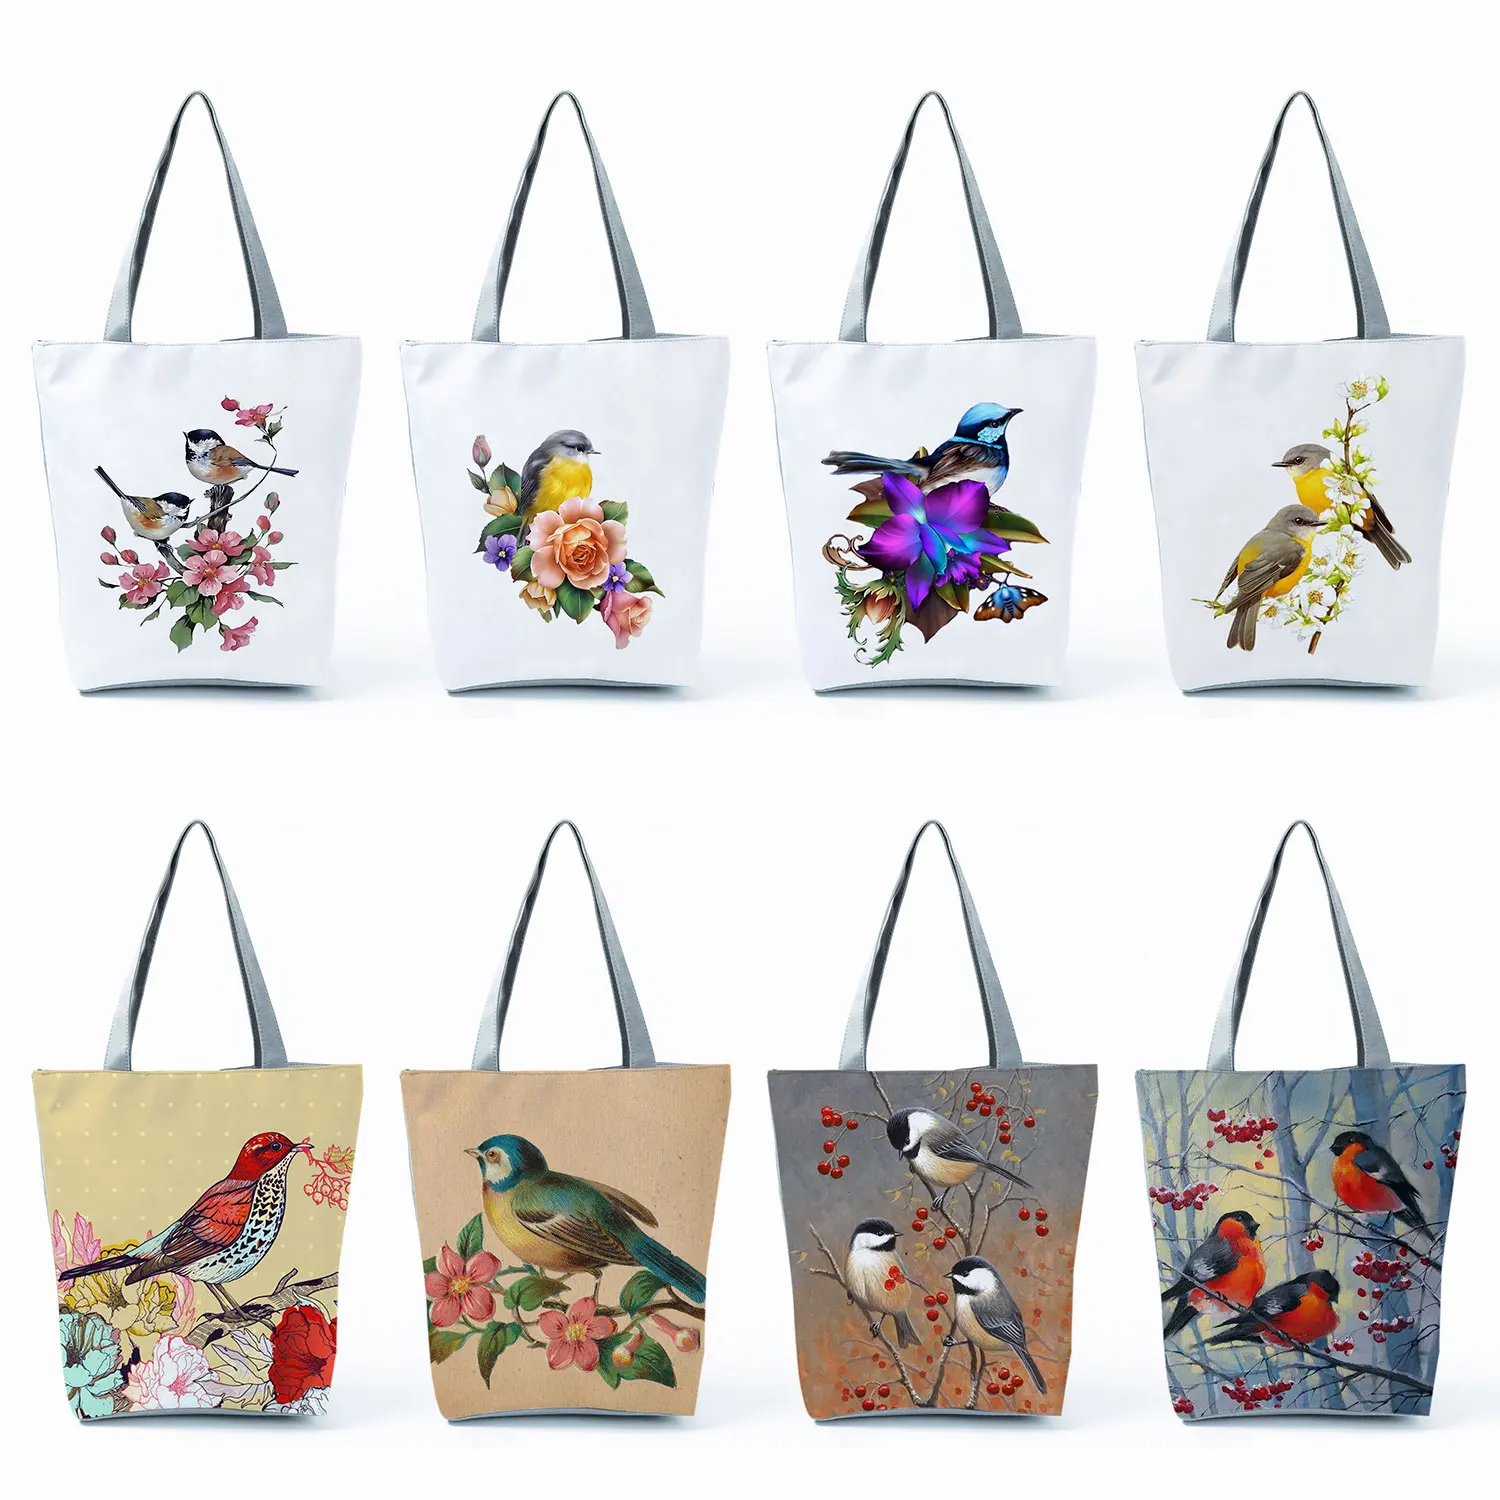 

Outdoor Customizable Handbags Casual Women's Shoulder Bag Cute Lark Parrot Bird Print The Tote Bag Large Capacity Shopping Bags